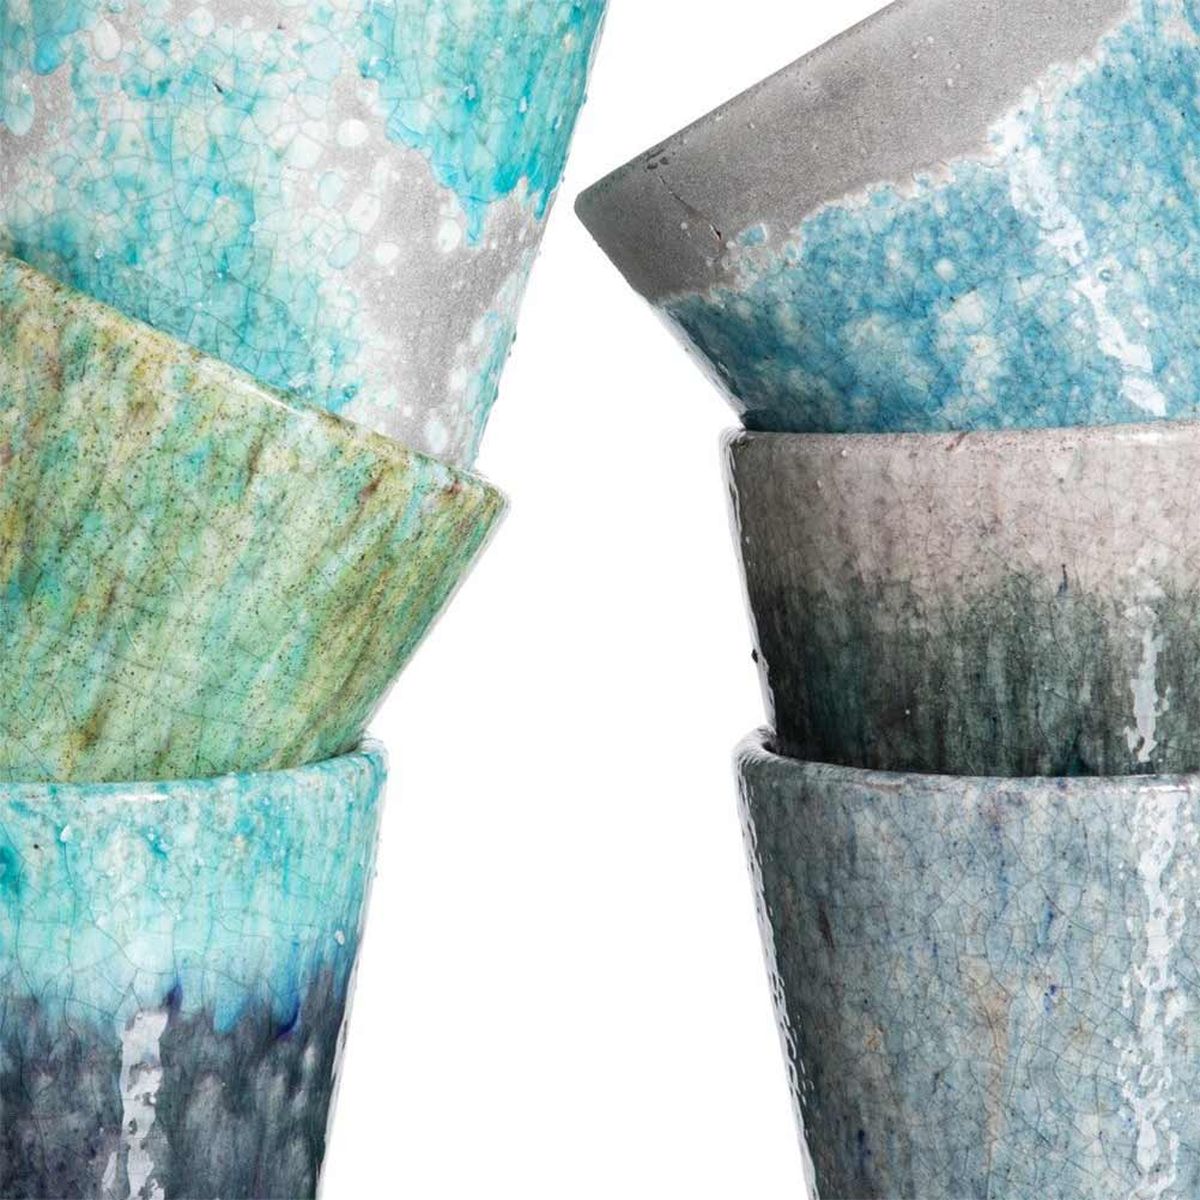 Cache-pot bleu clair en cramique vieillie